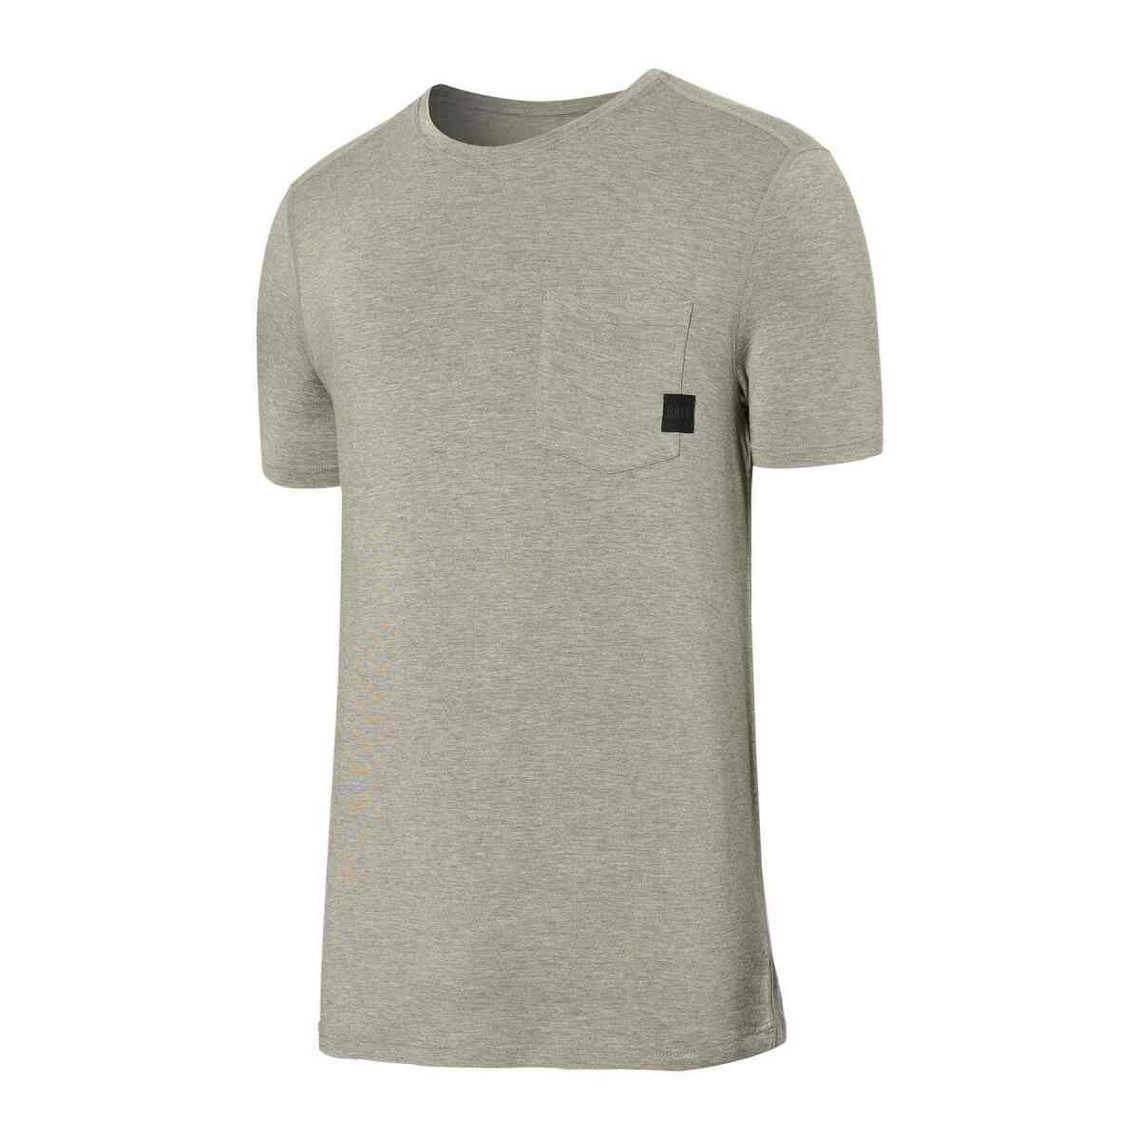 tee-shirt manches courtes homme sleepwalker gris en coton modal